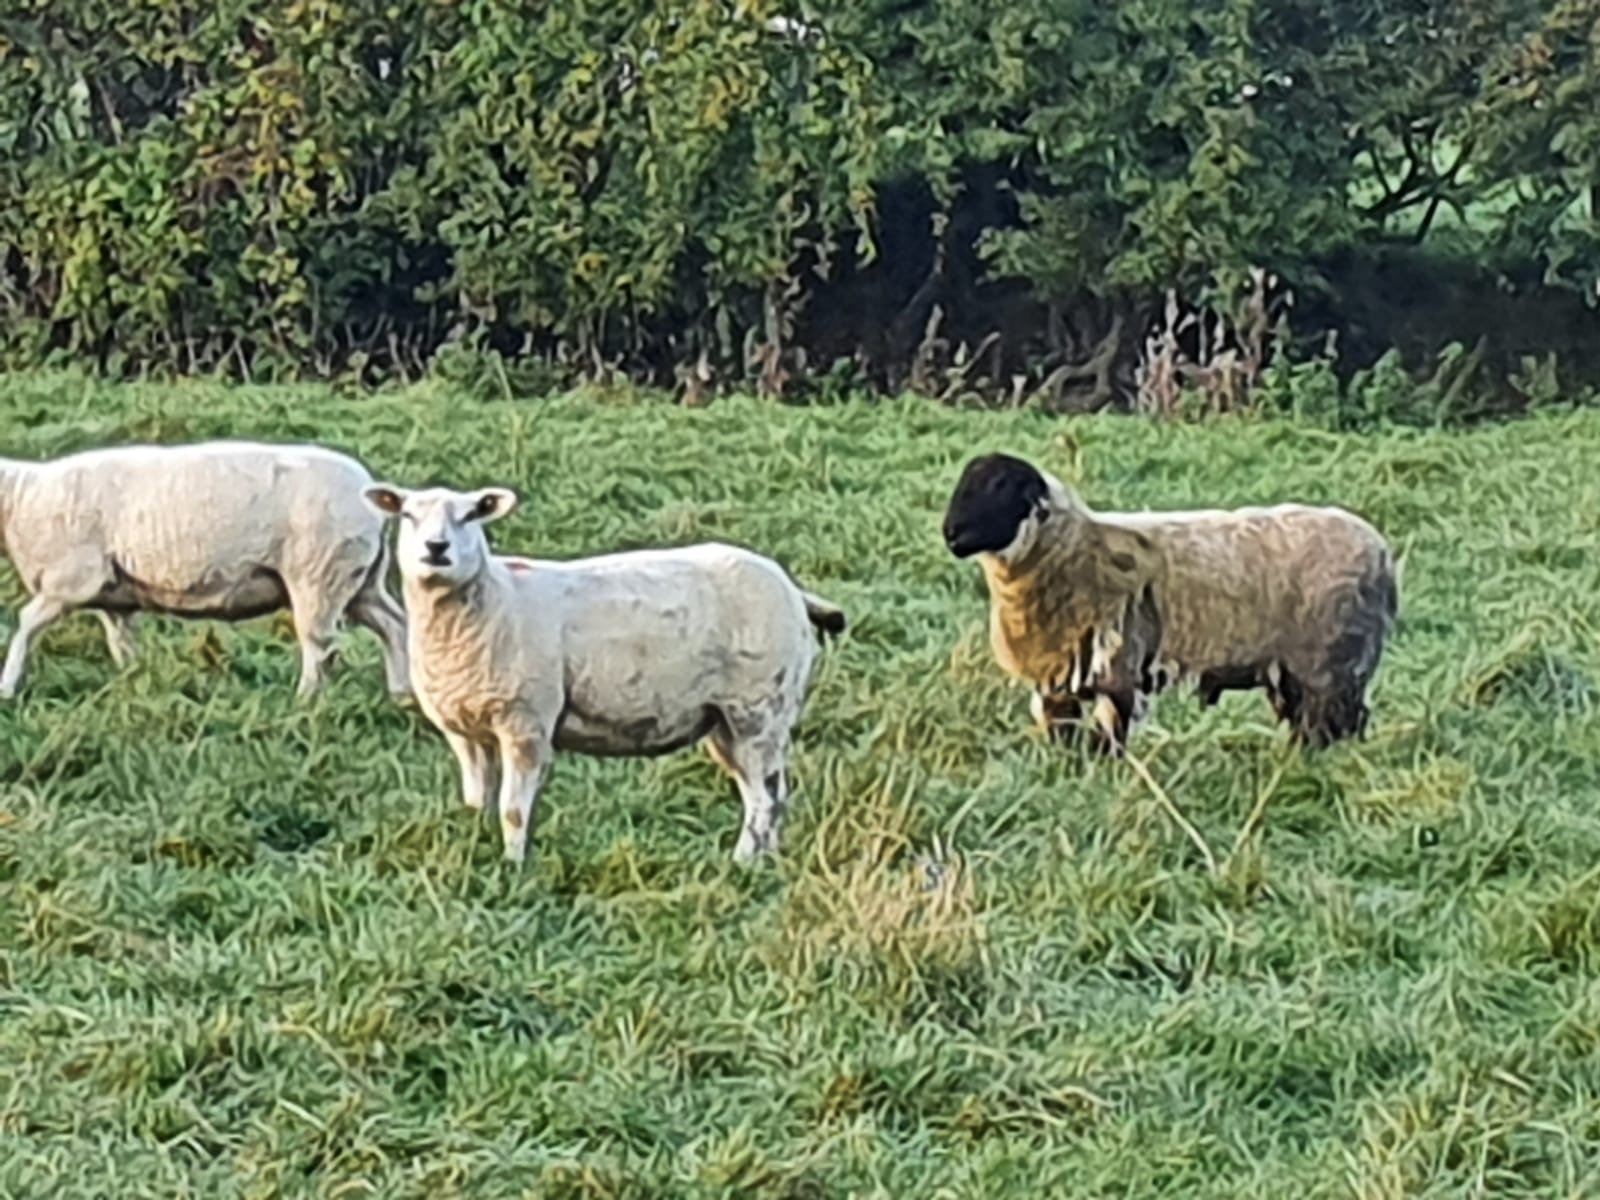 Loughrynn Suffolk Ram Lamb in Natural CPT mating team!